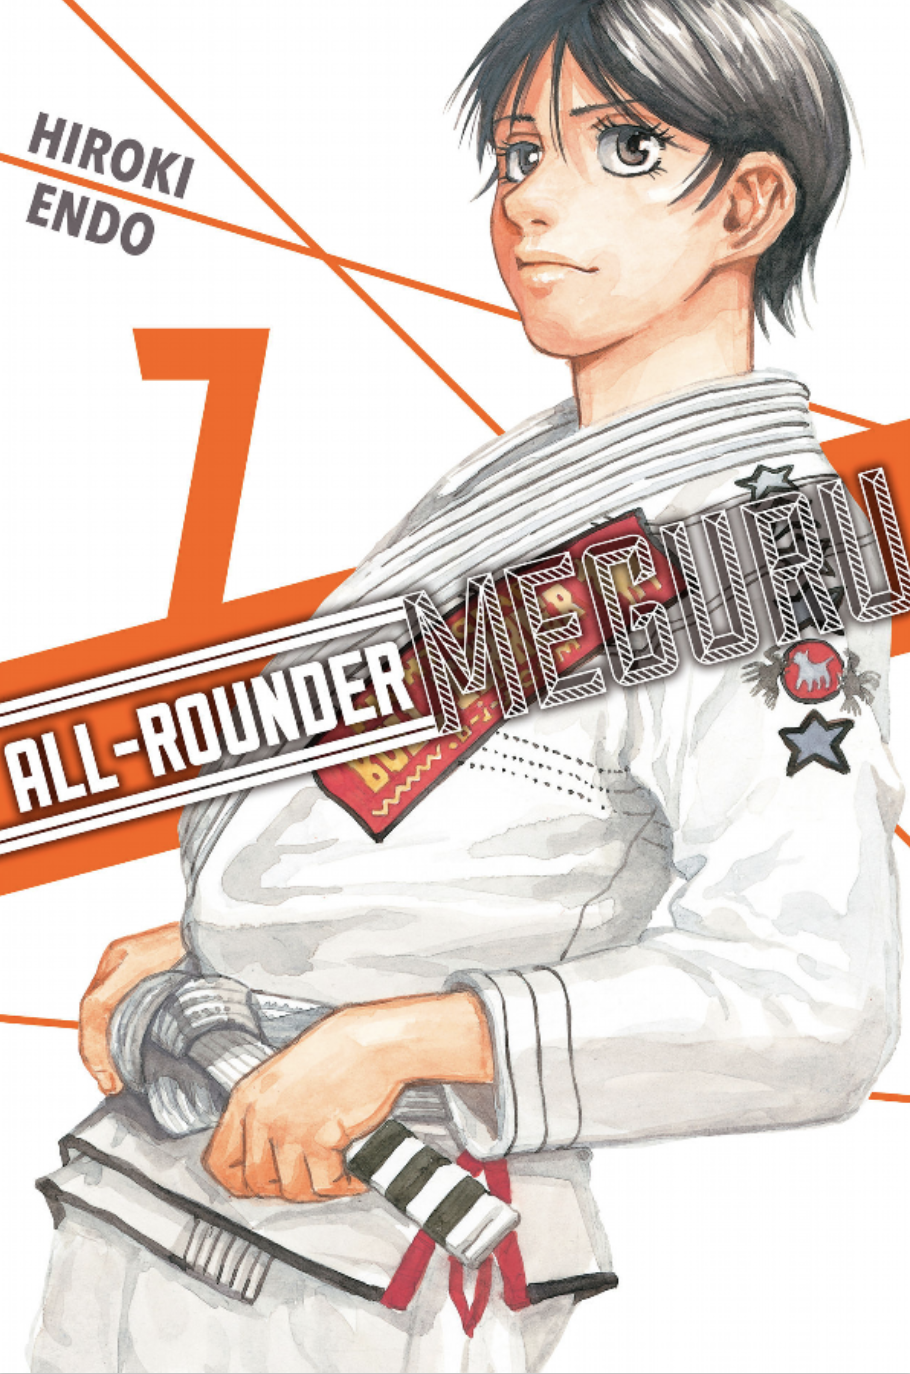 All Rounder Meguru vol. 7 by Hiroki Endo